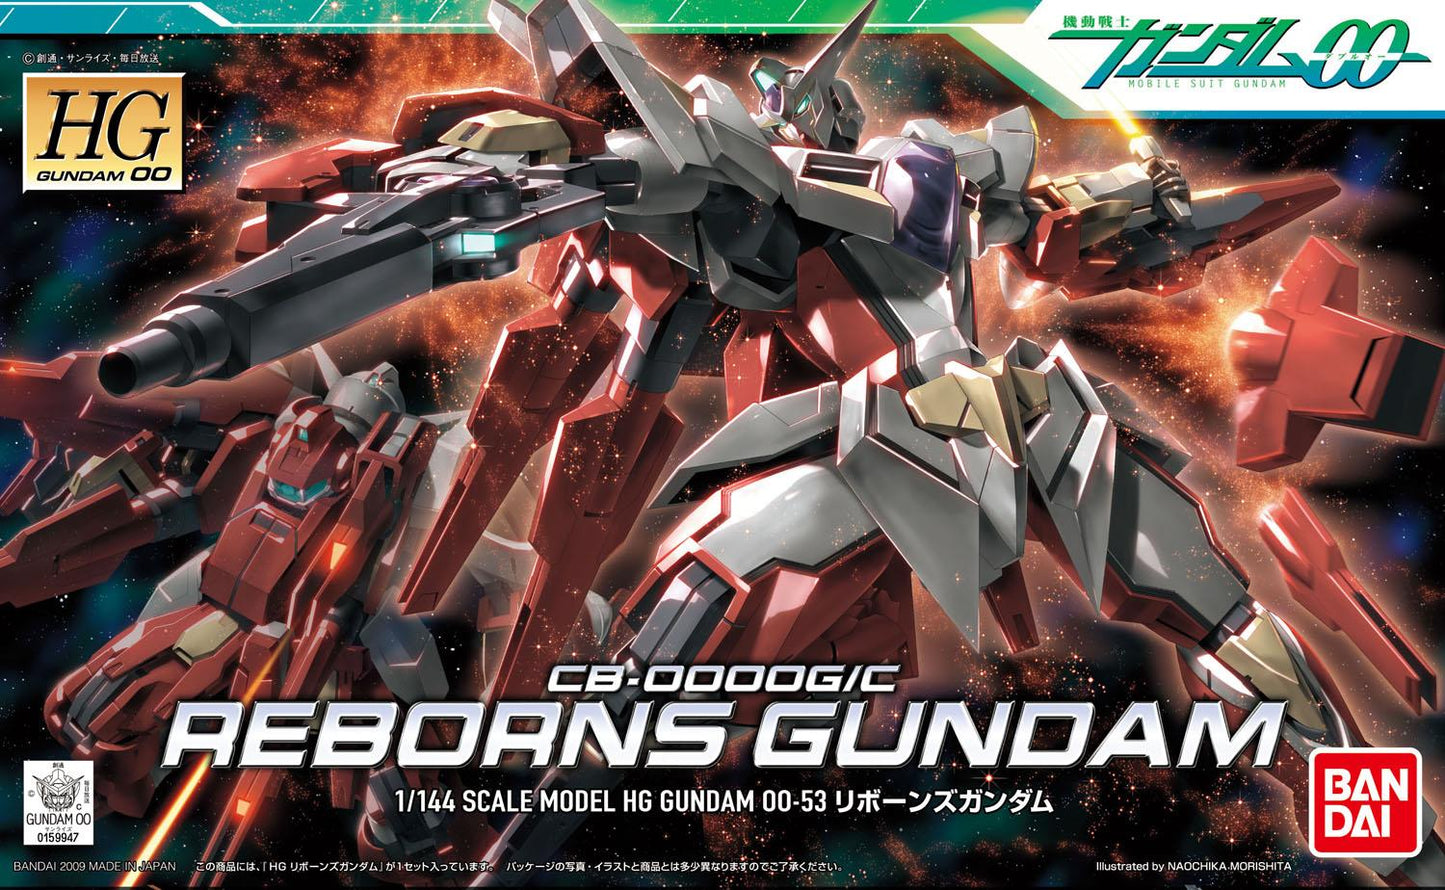 Gundam: Reborns Gundam HG Model